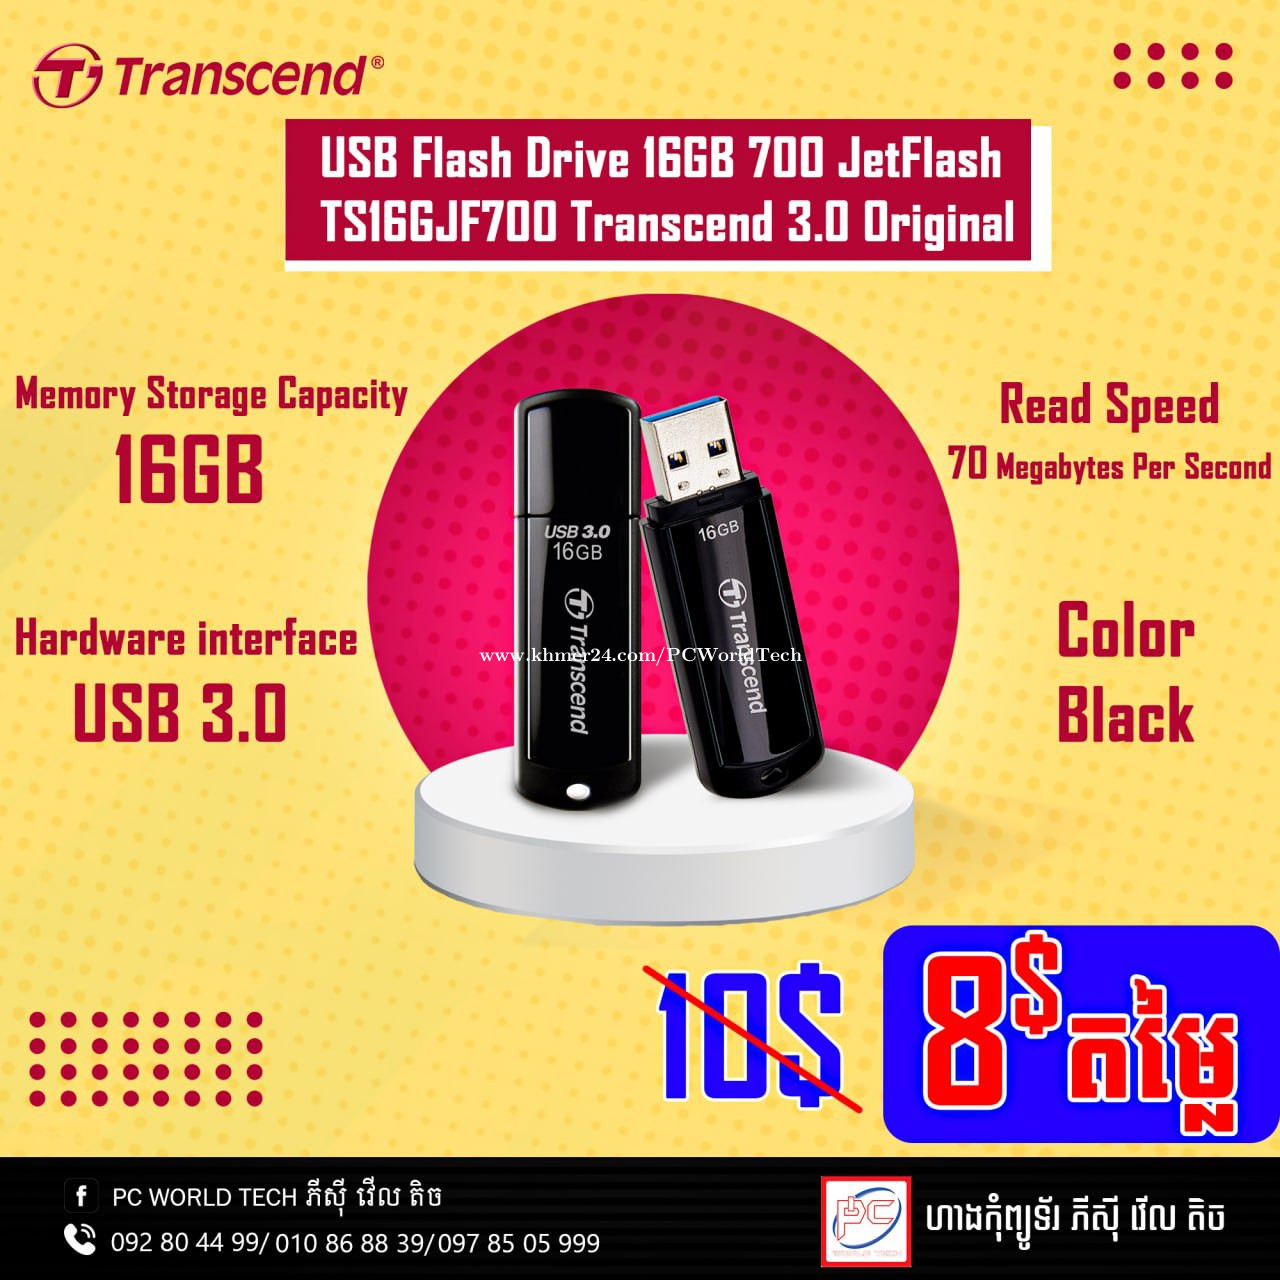 USB Flash Drive 16GB Transcend 3.1 Original price $8 in Phnom Penh,  Cambodia - Khmer24.com